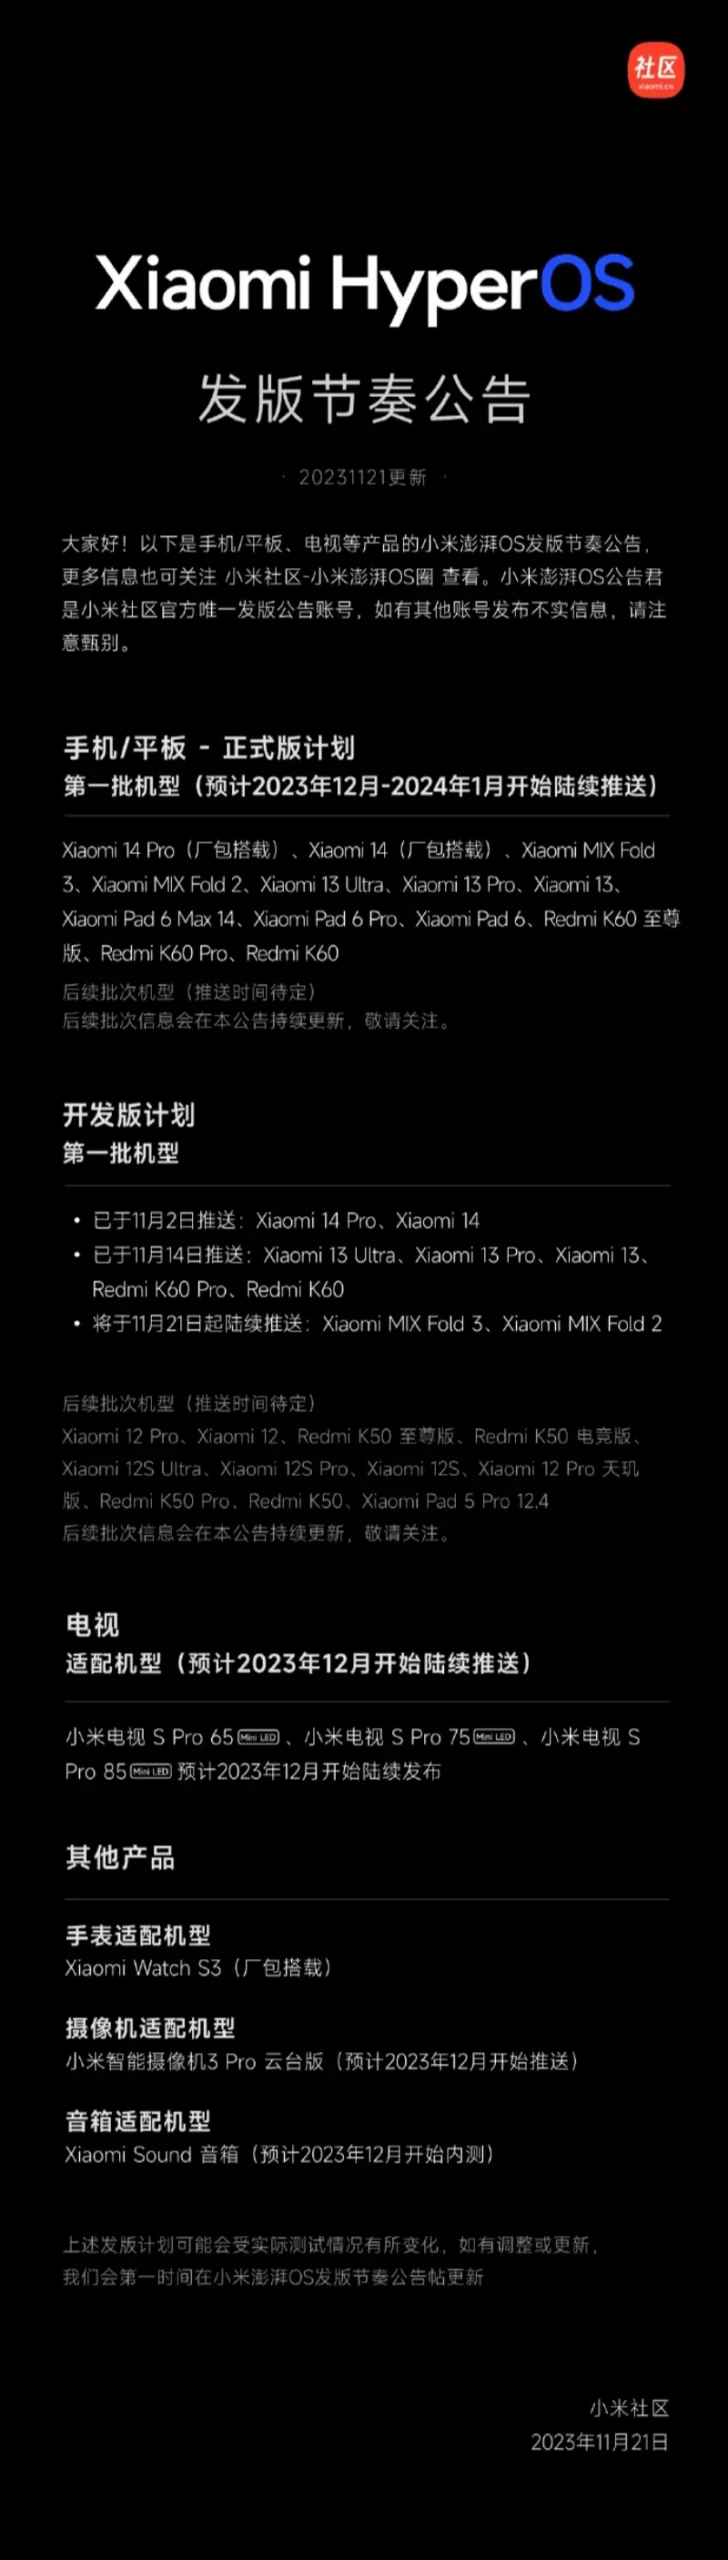 Xiaomi HyperOS开发版首批机型已全量推送，包含手机平板电视等设备